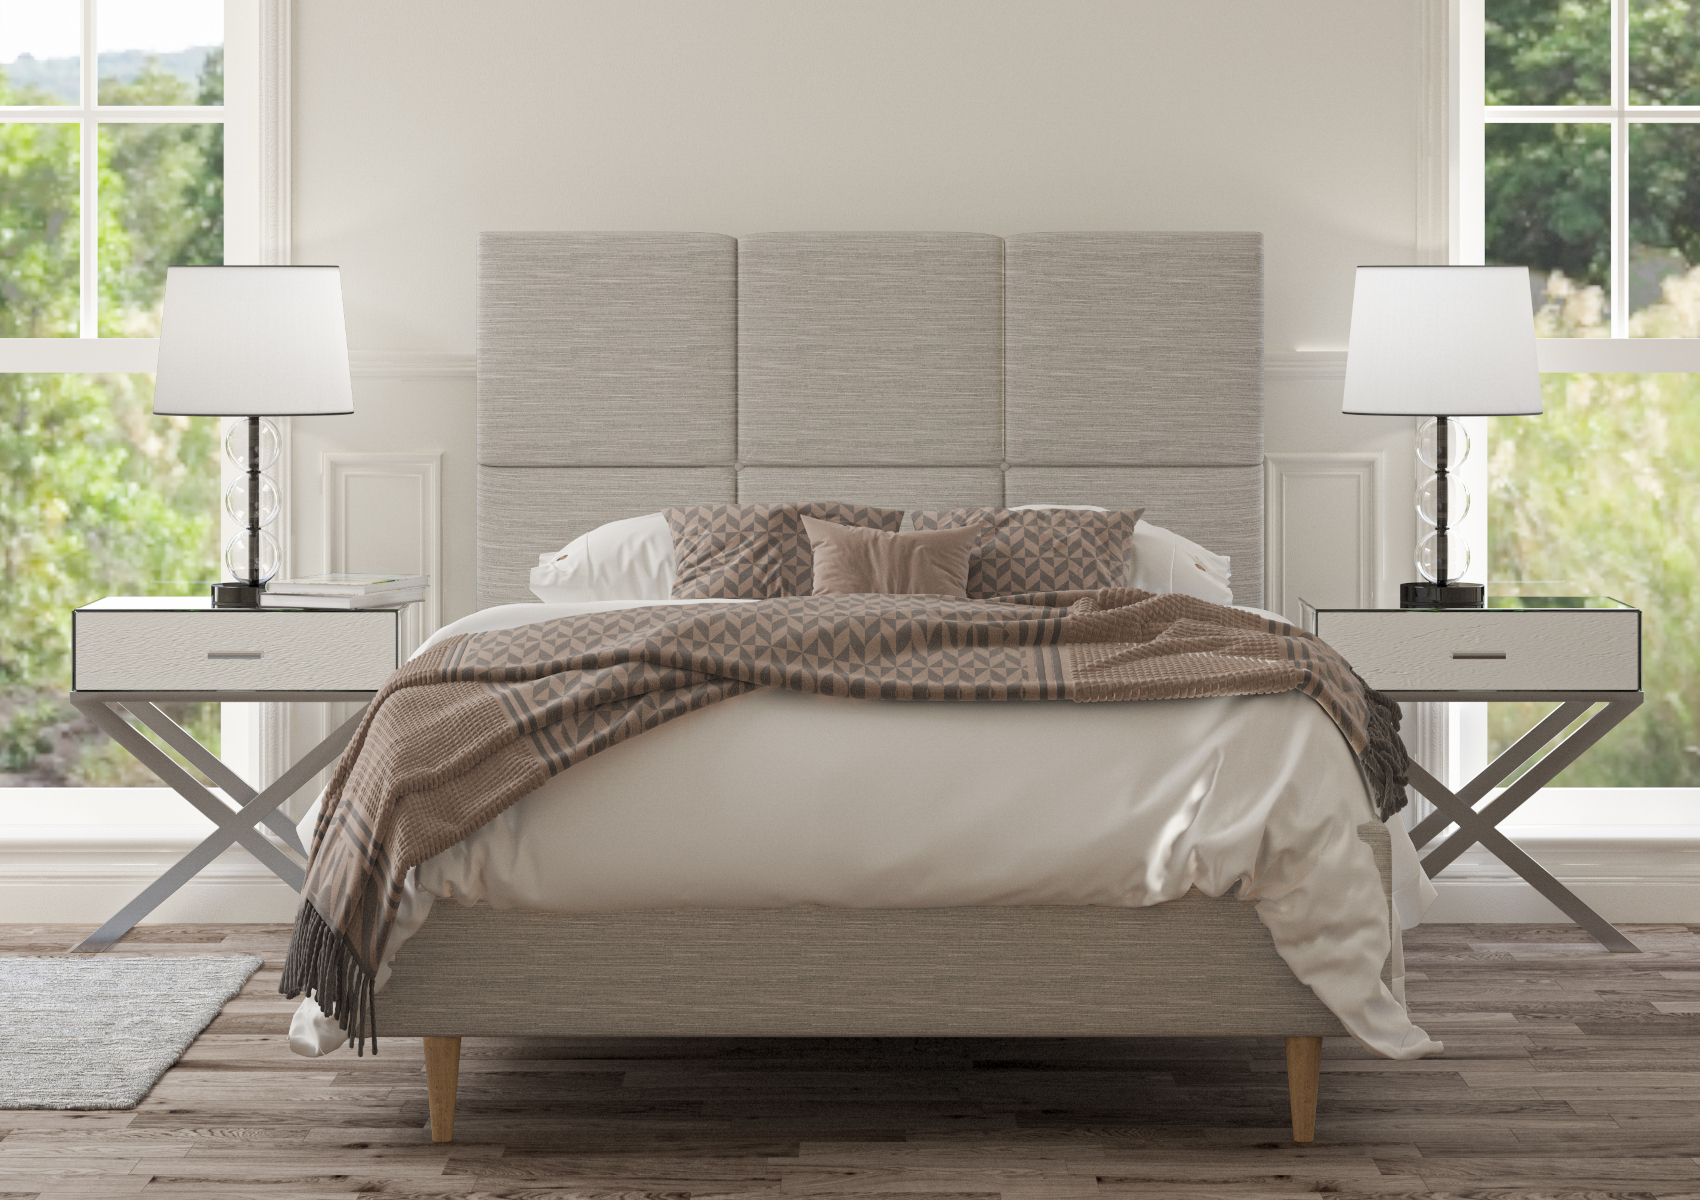 View Lauren Linea Fog Upholstered Double Bed Time4Sleep information